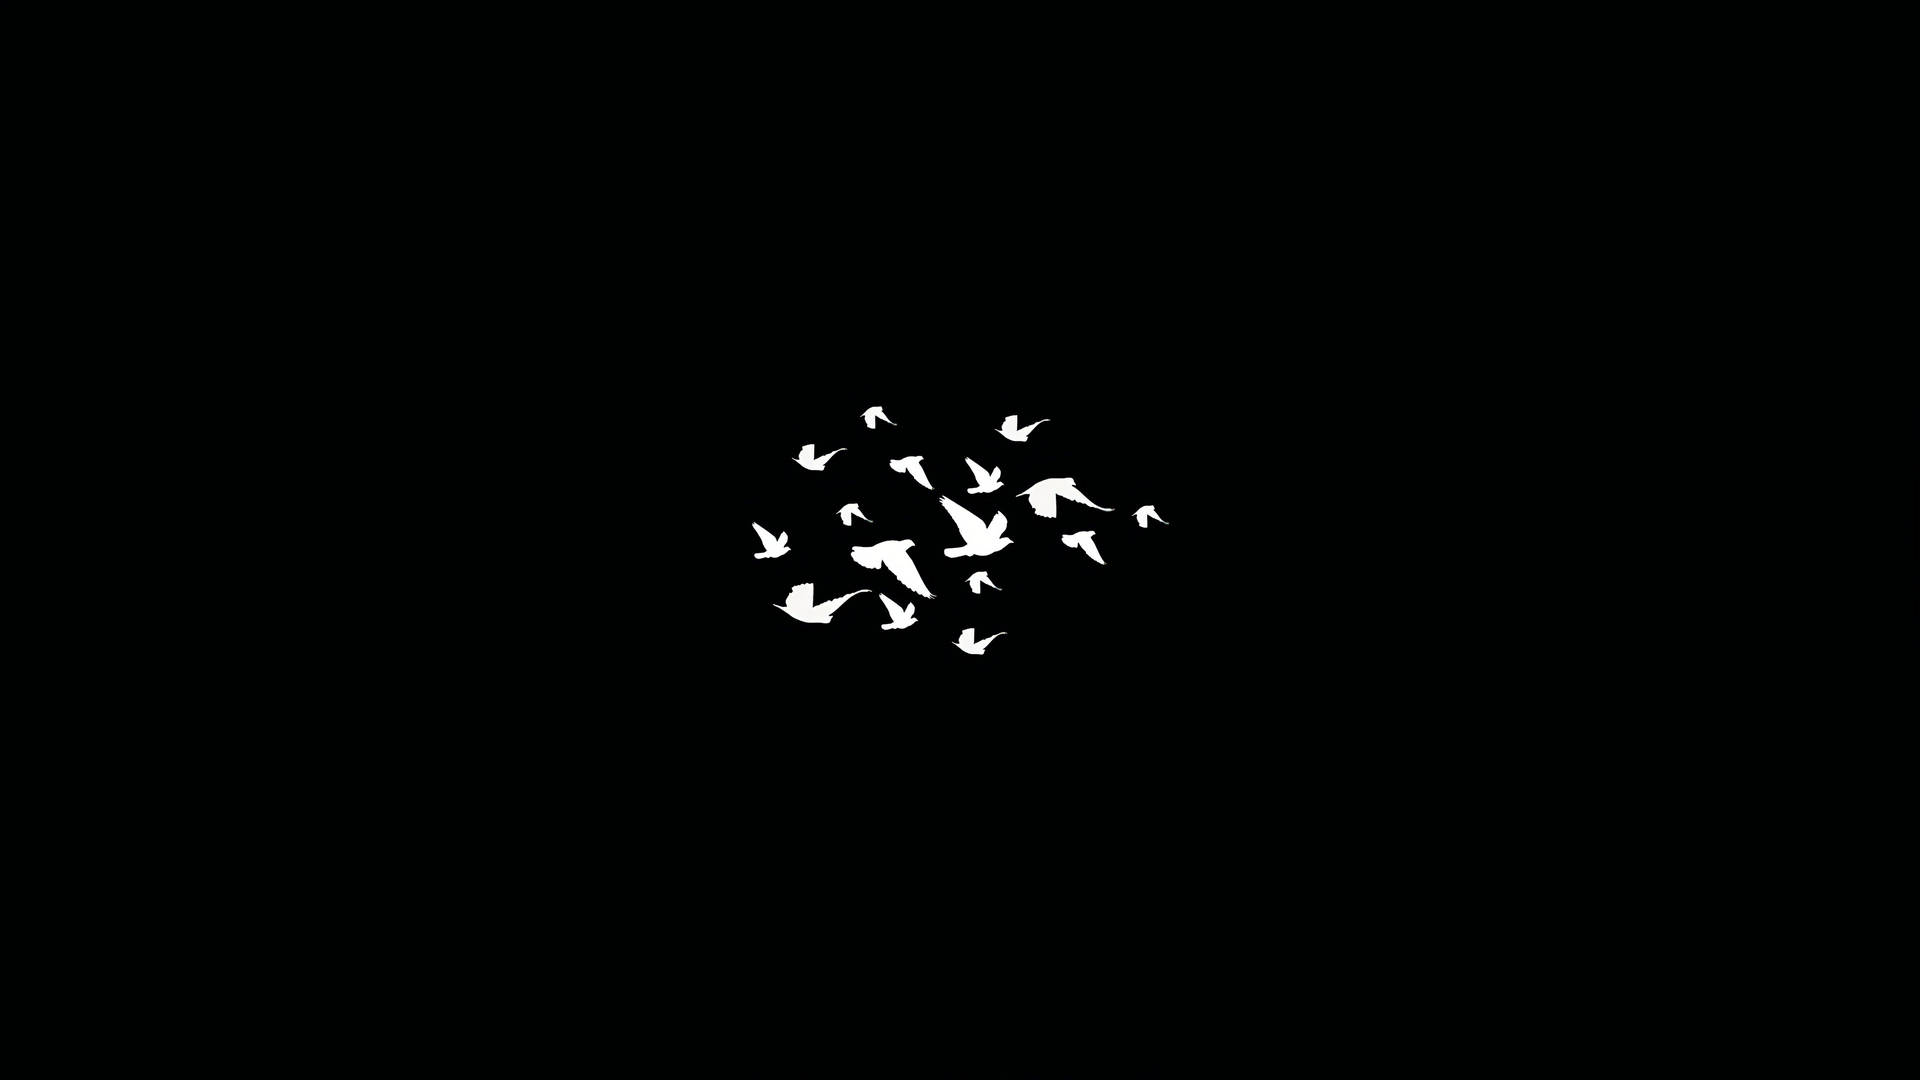 Dark Minimalist Flock Of Birds